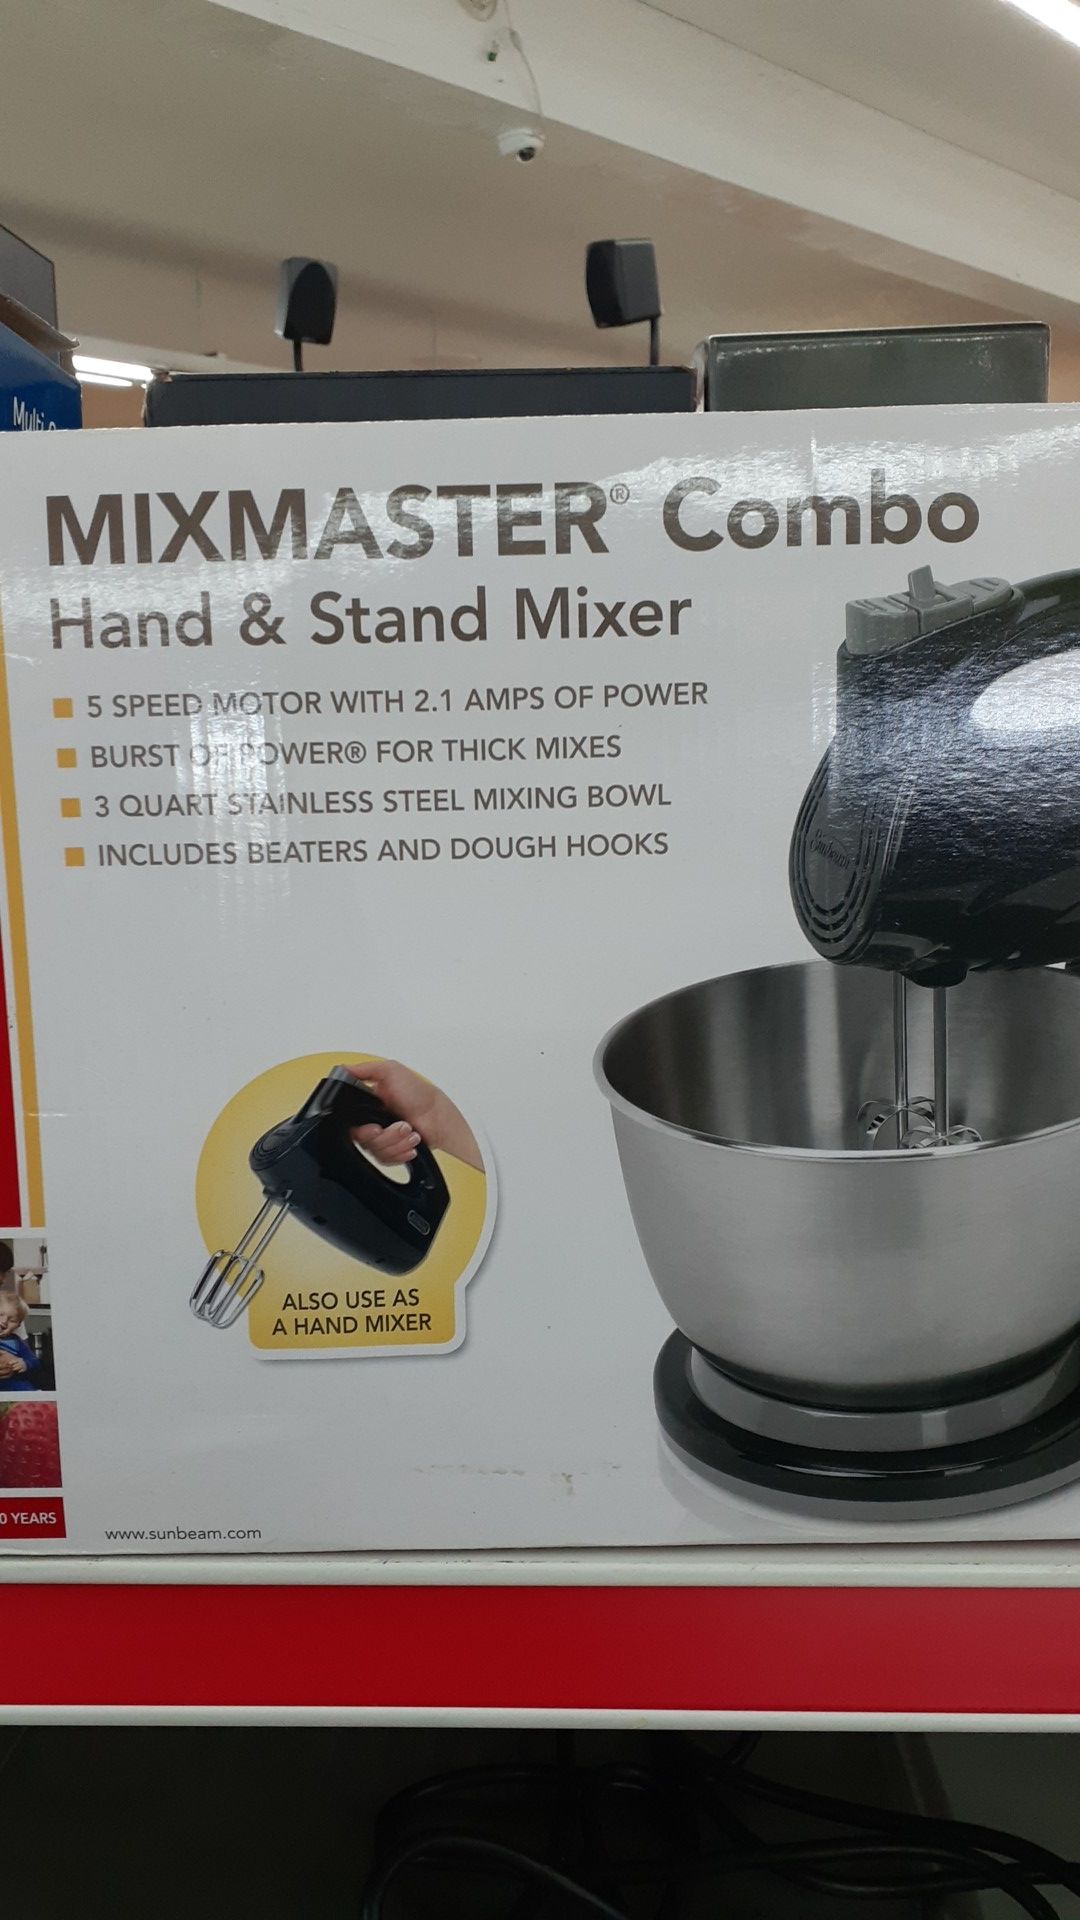 Mix master combo